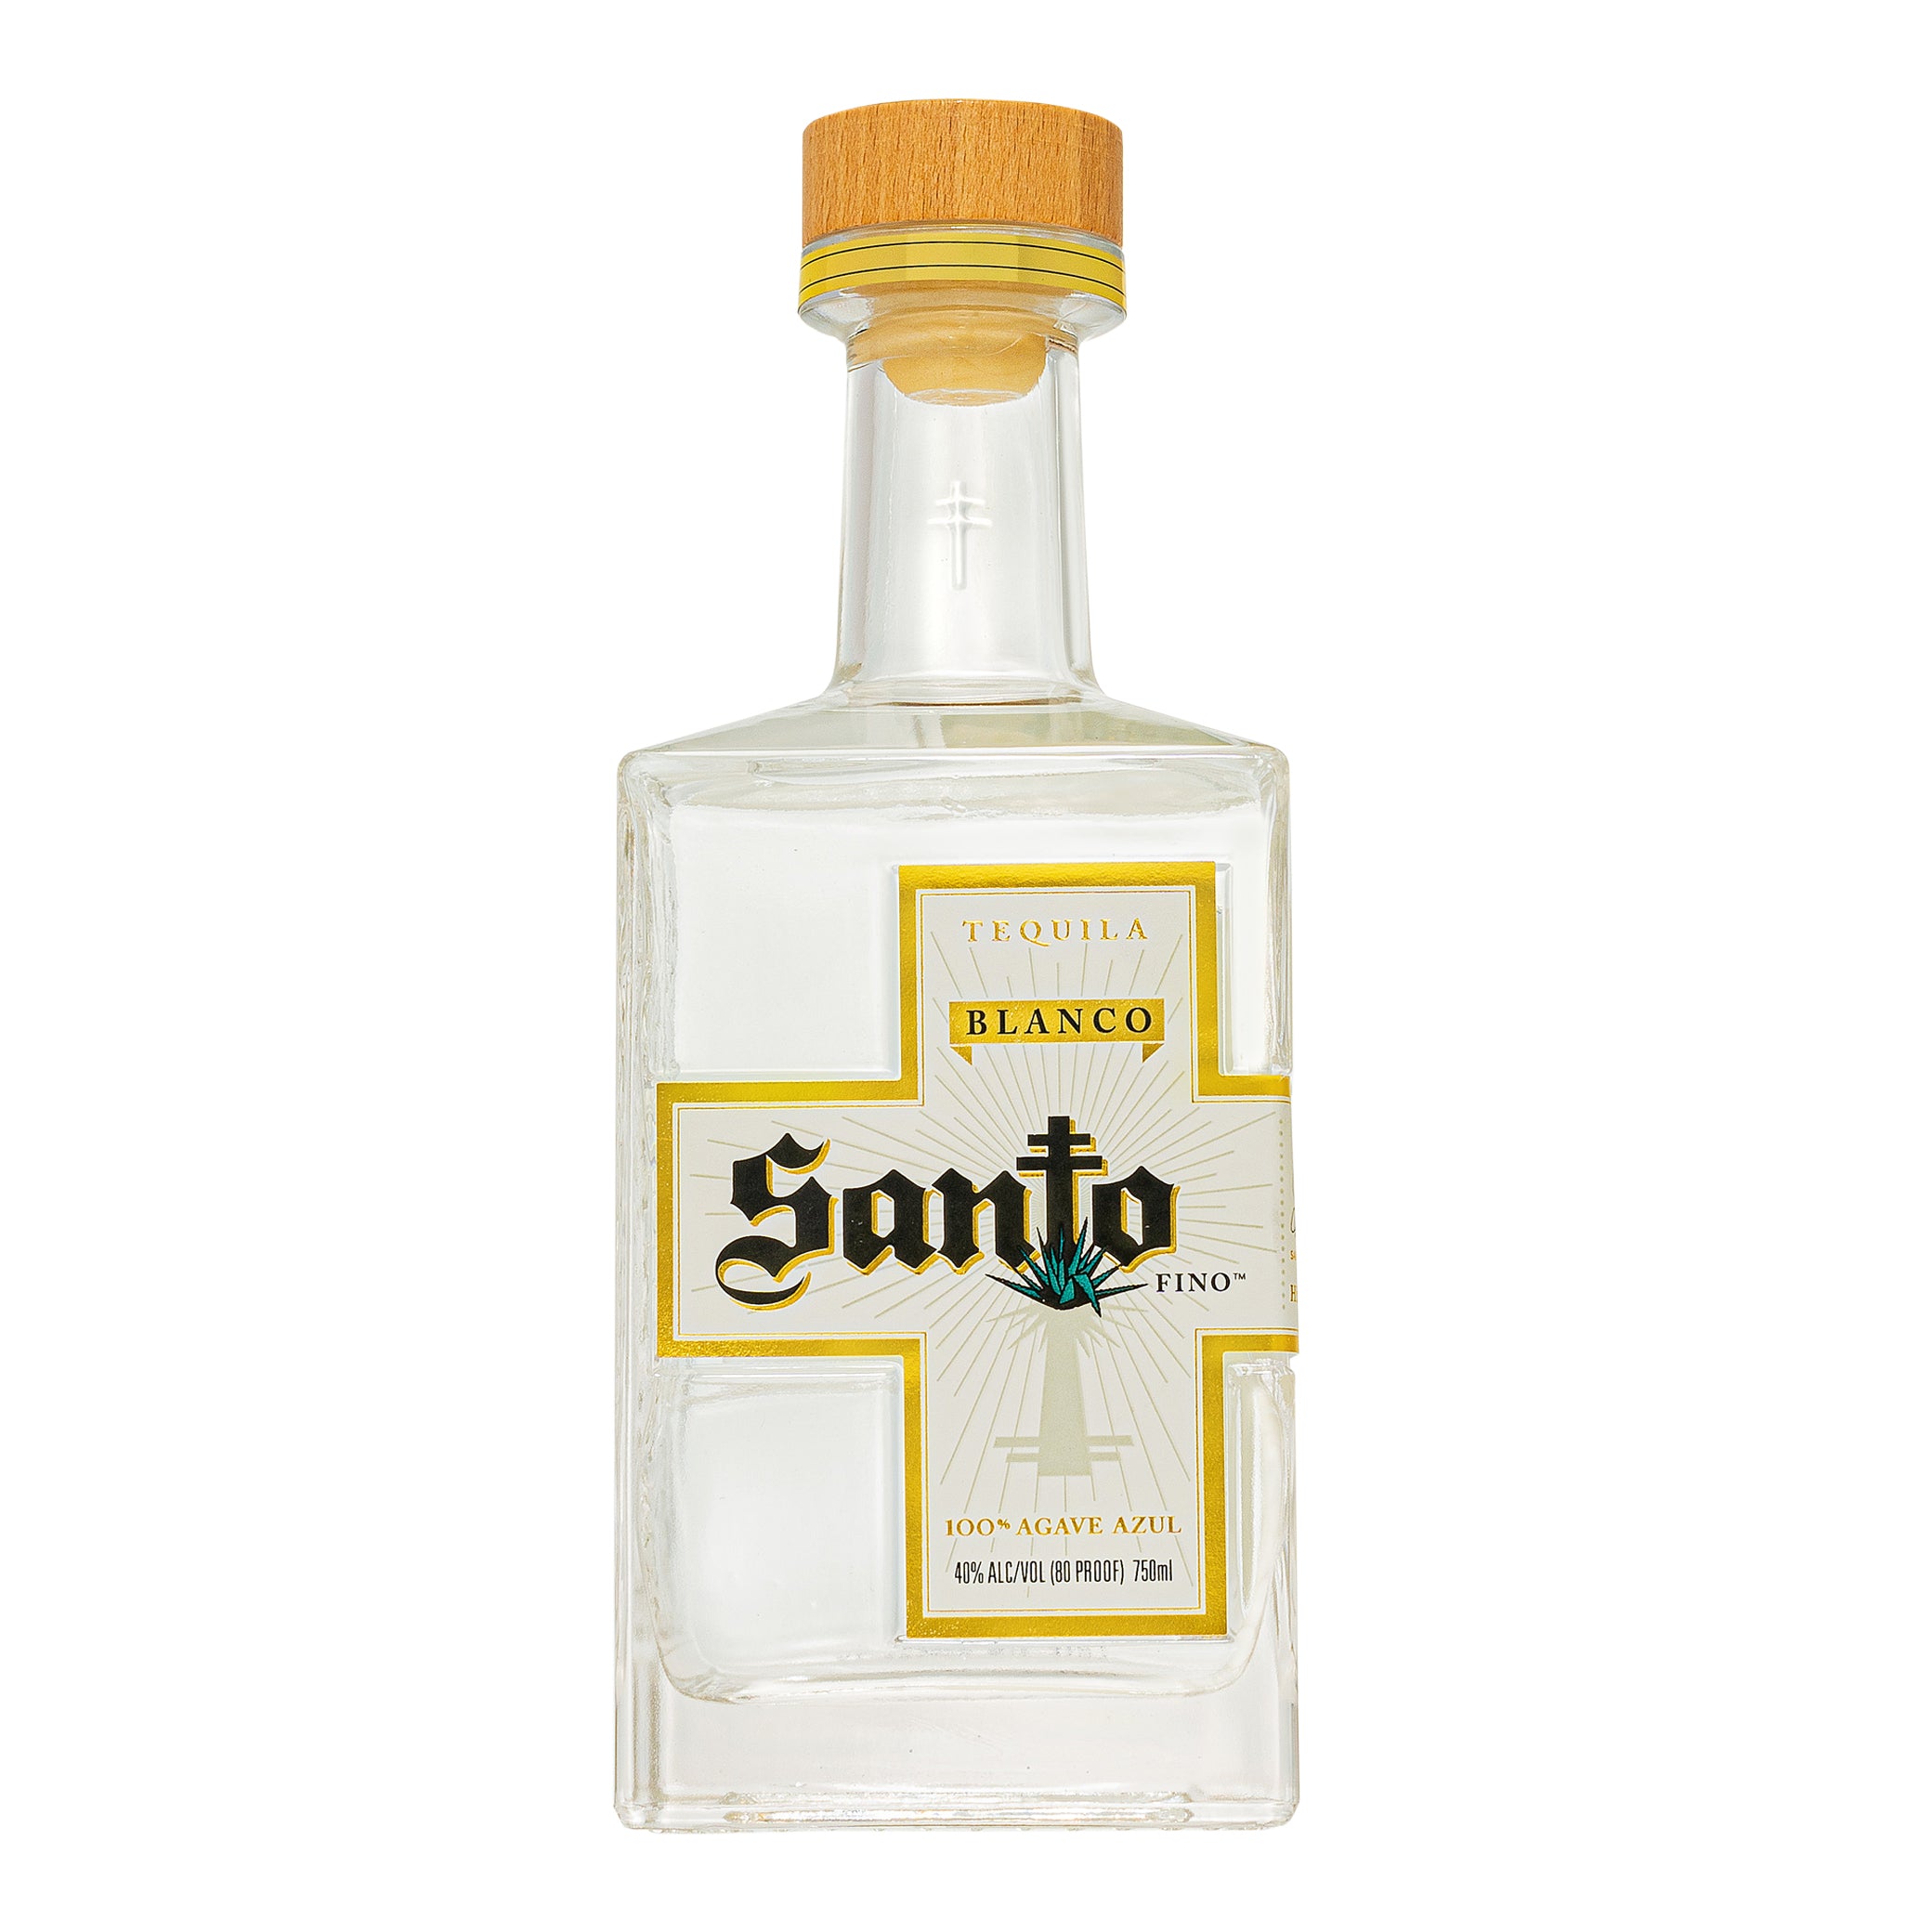 Santo Blanco Tequila